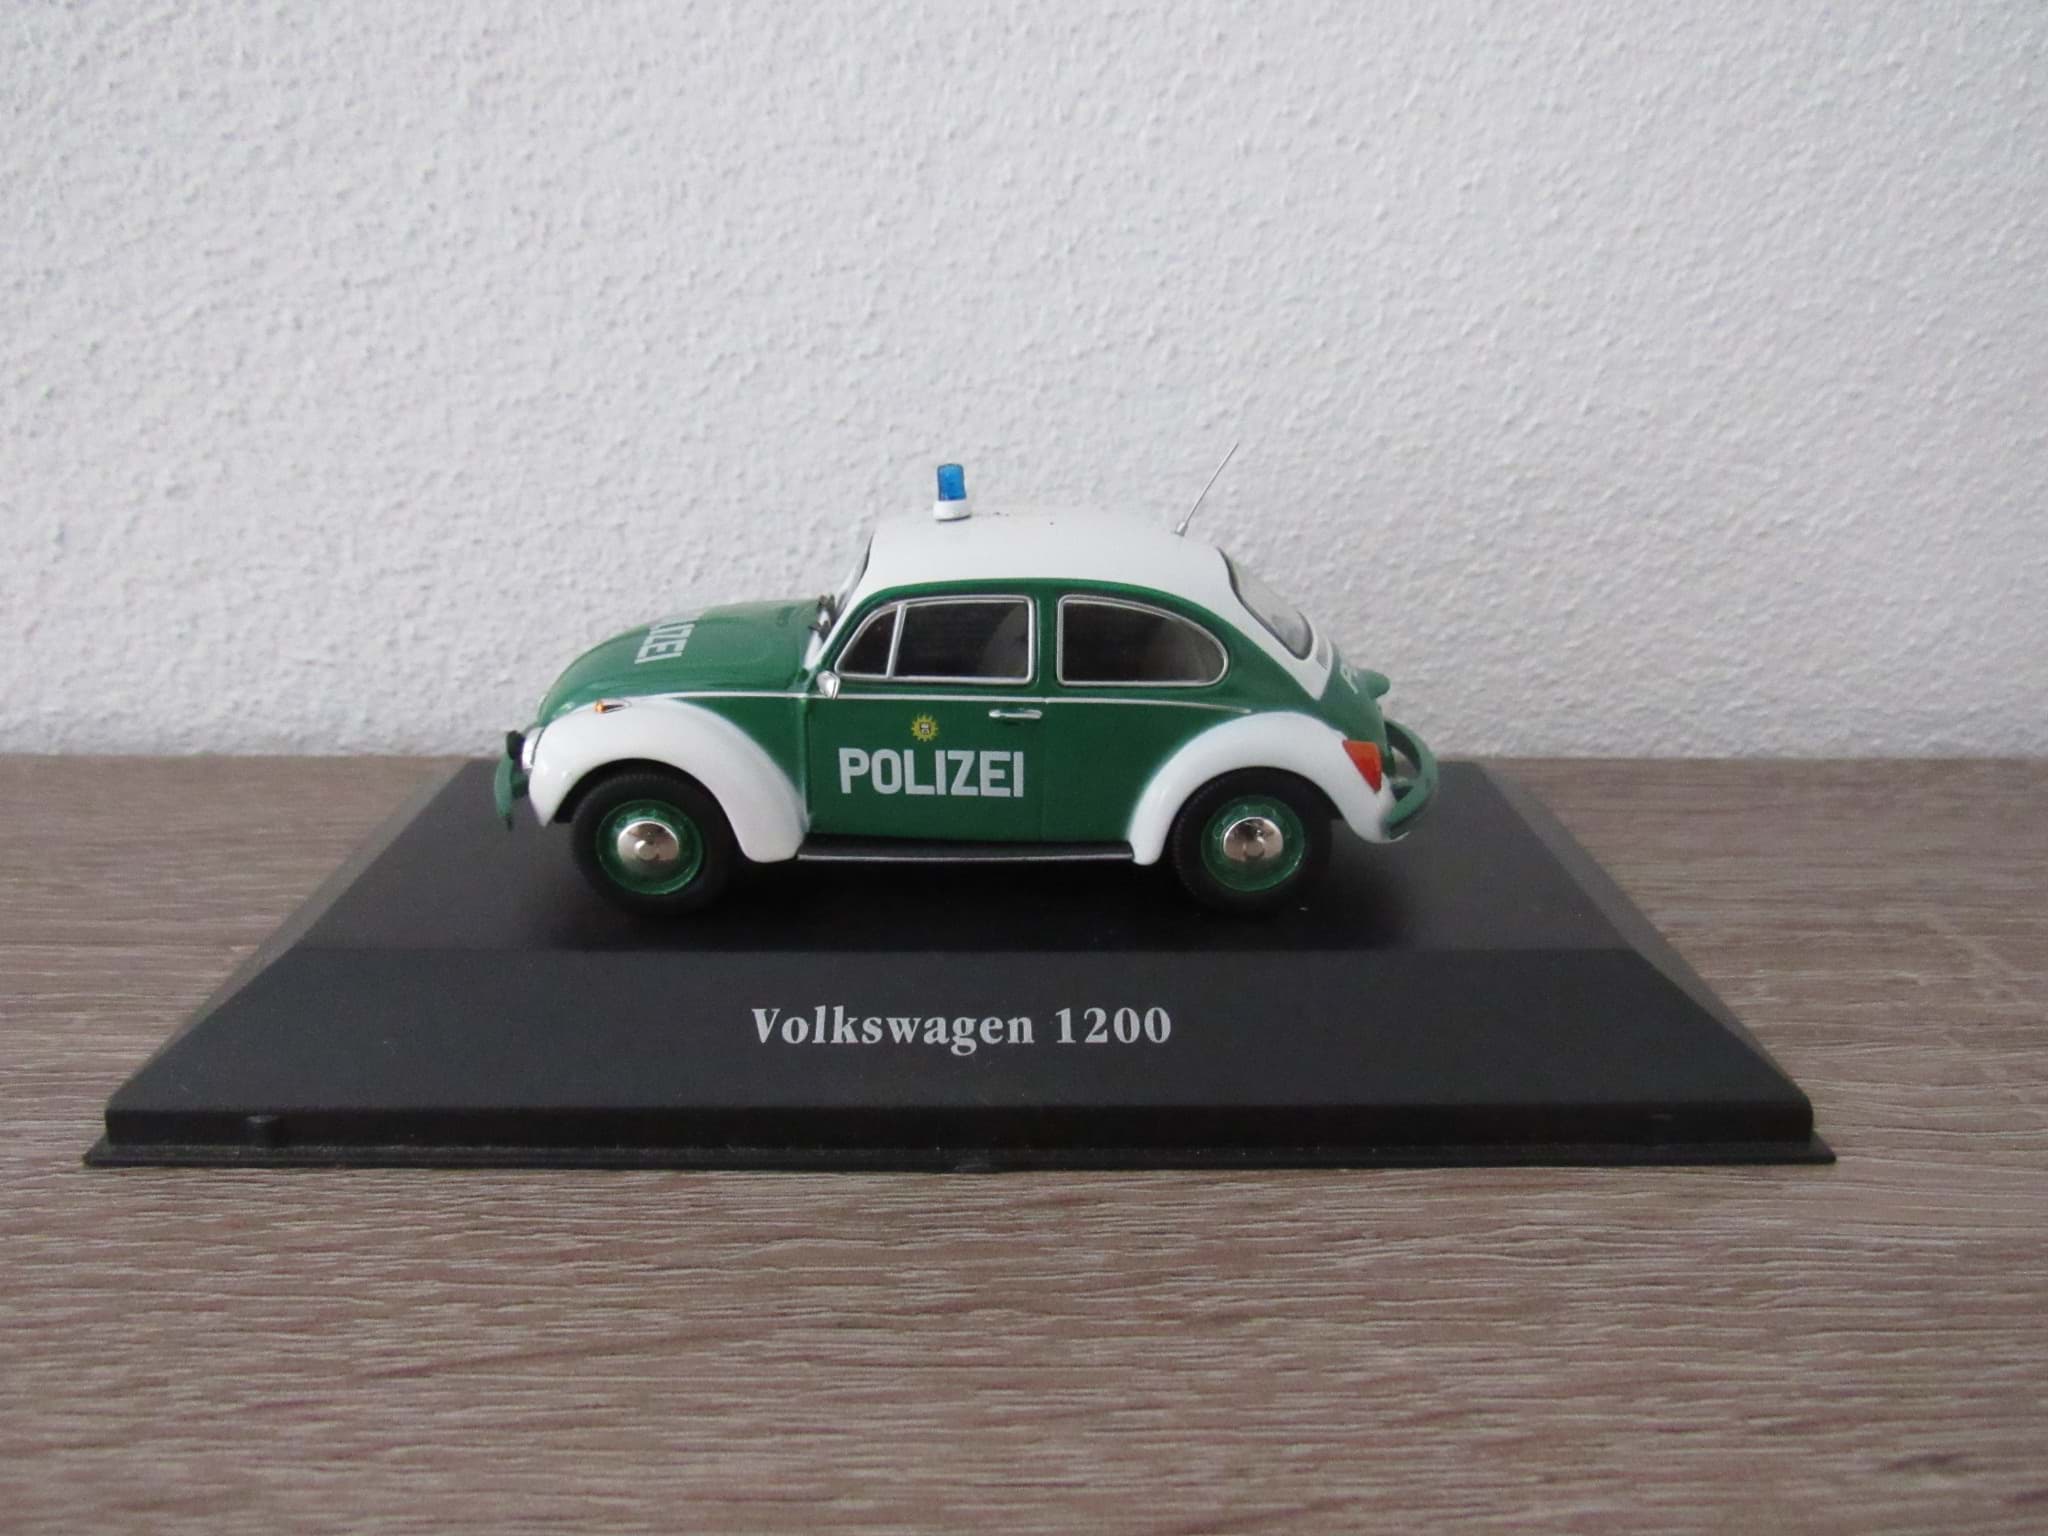 Bild av Volkswagen 1200 VW Käfer Polizei Modell
